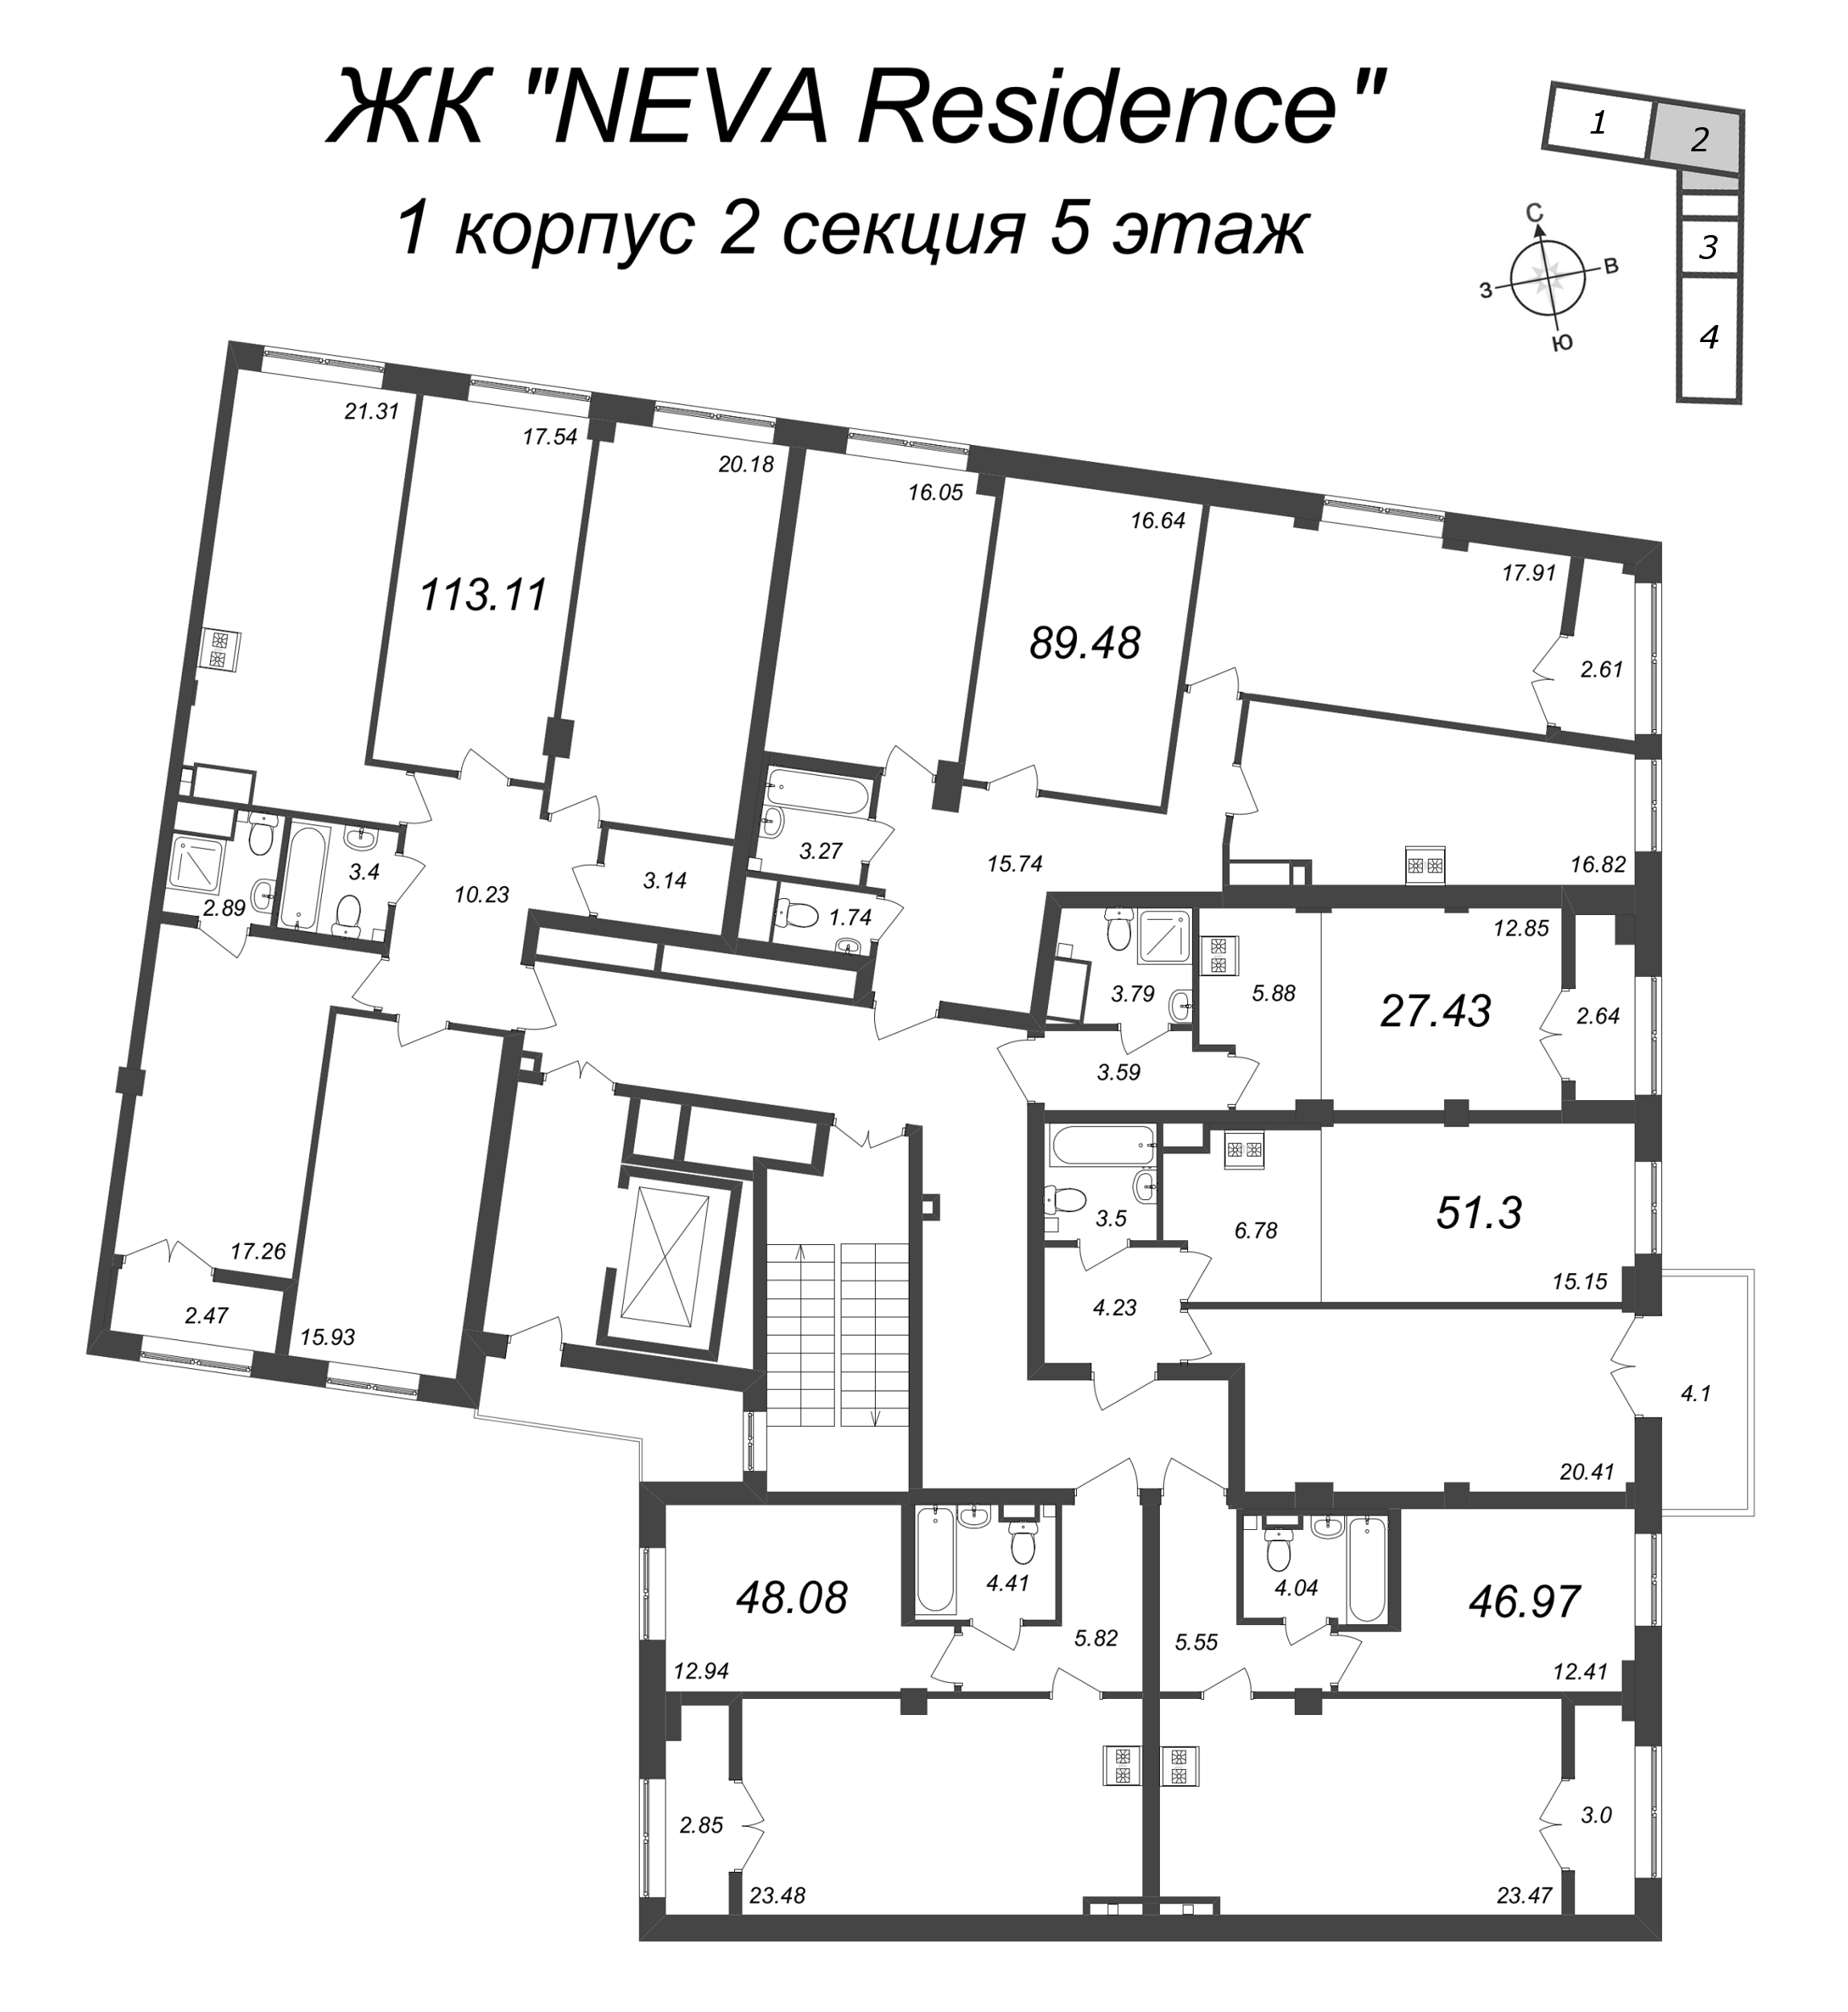 5-комнатная (Евро) квартира, 113.11 м² - планировка этажа